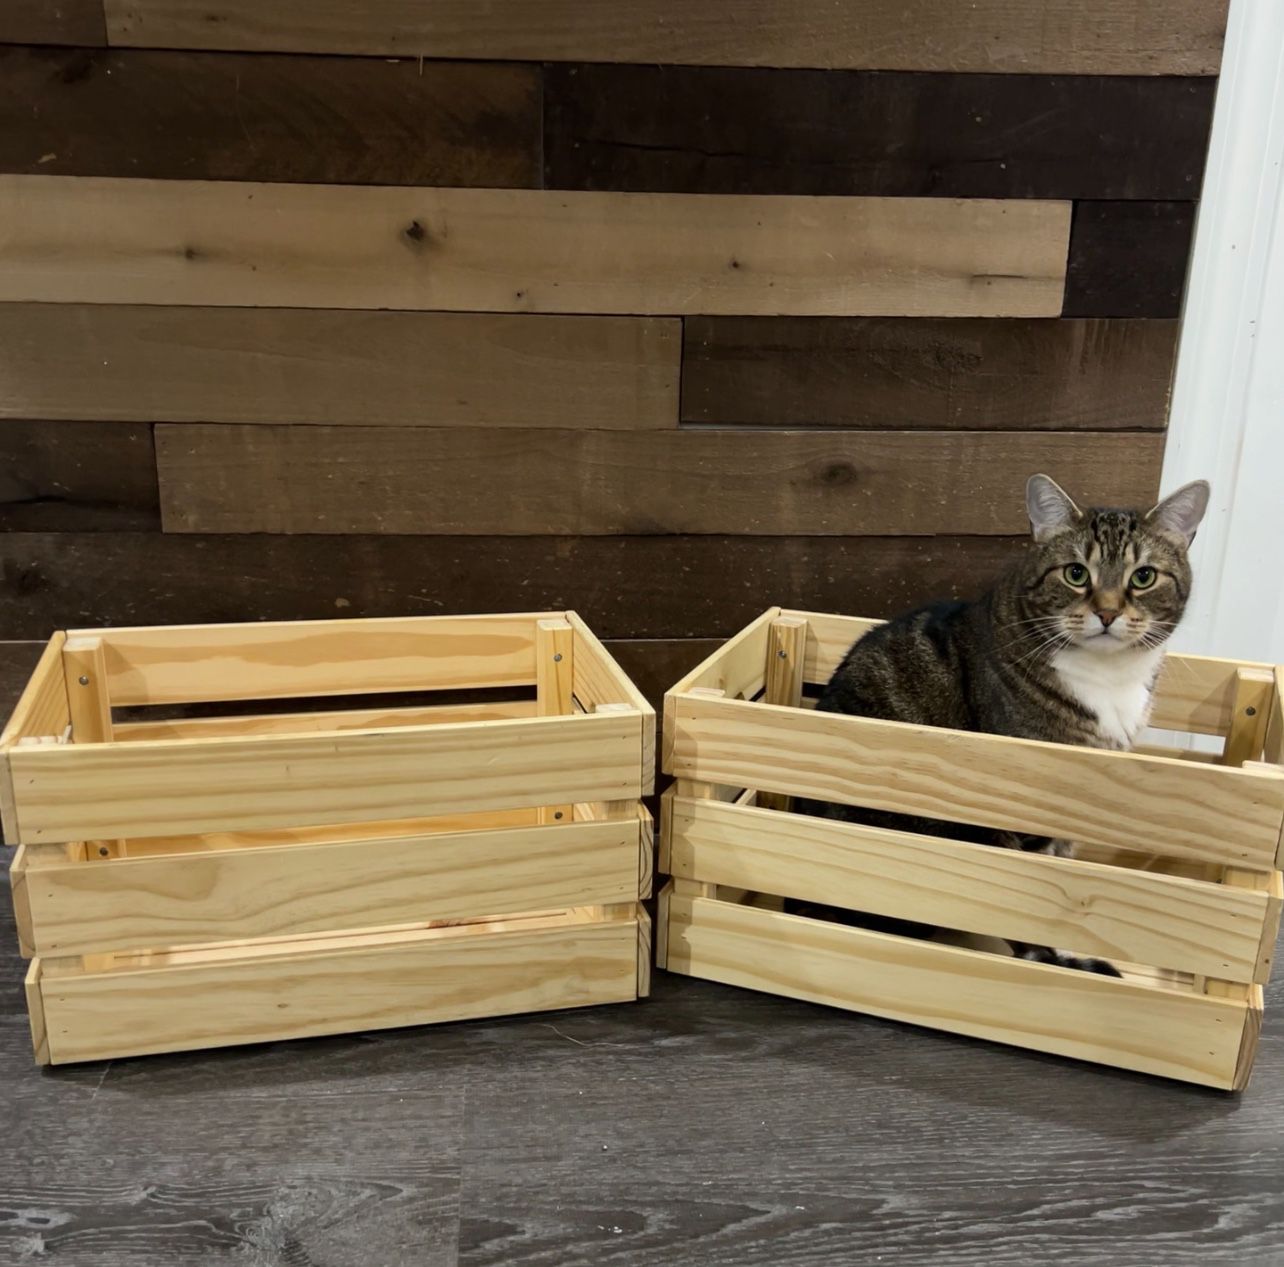 IKEA Set of Wooden Crates